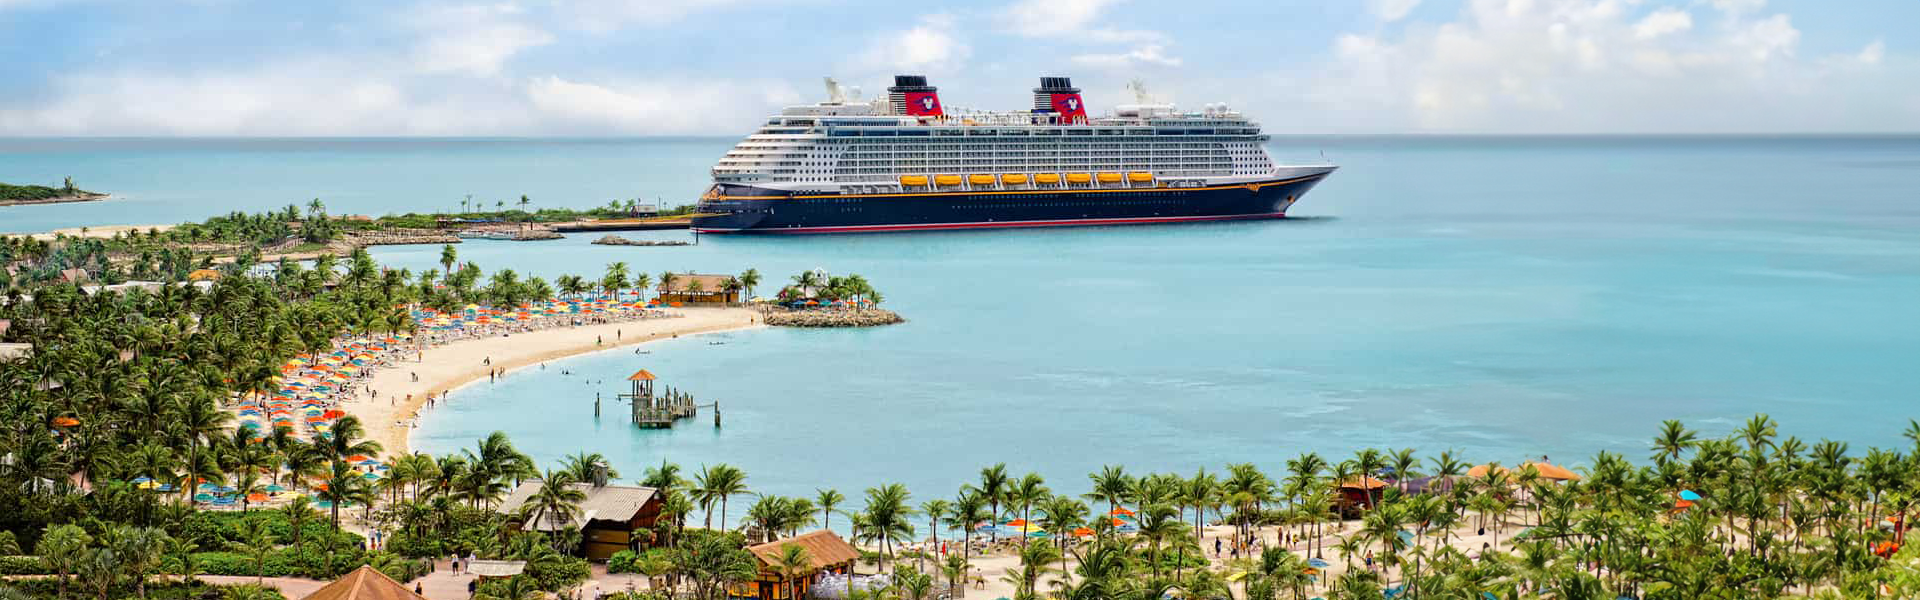 Caraibi da Favola con Disney Cruise Line